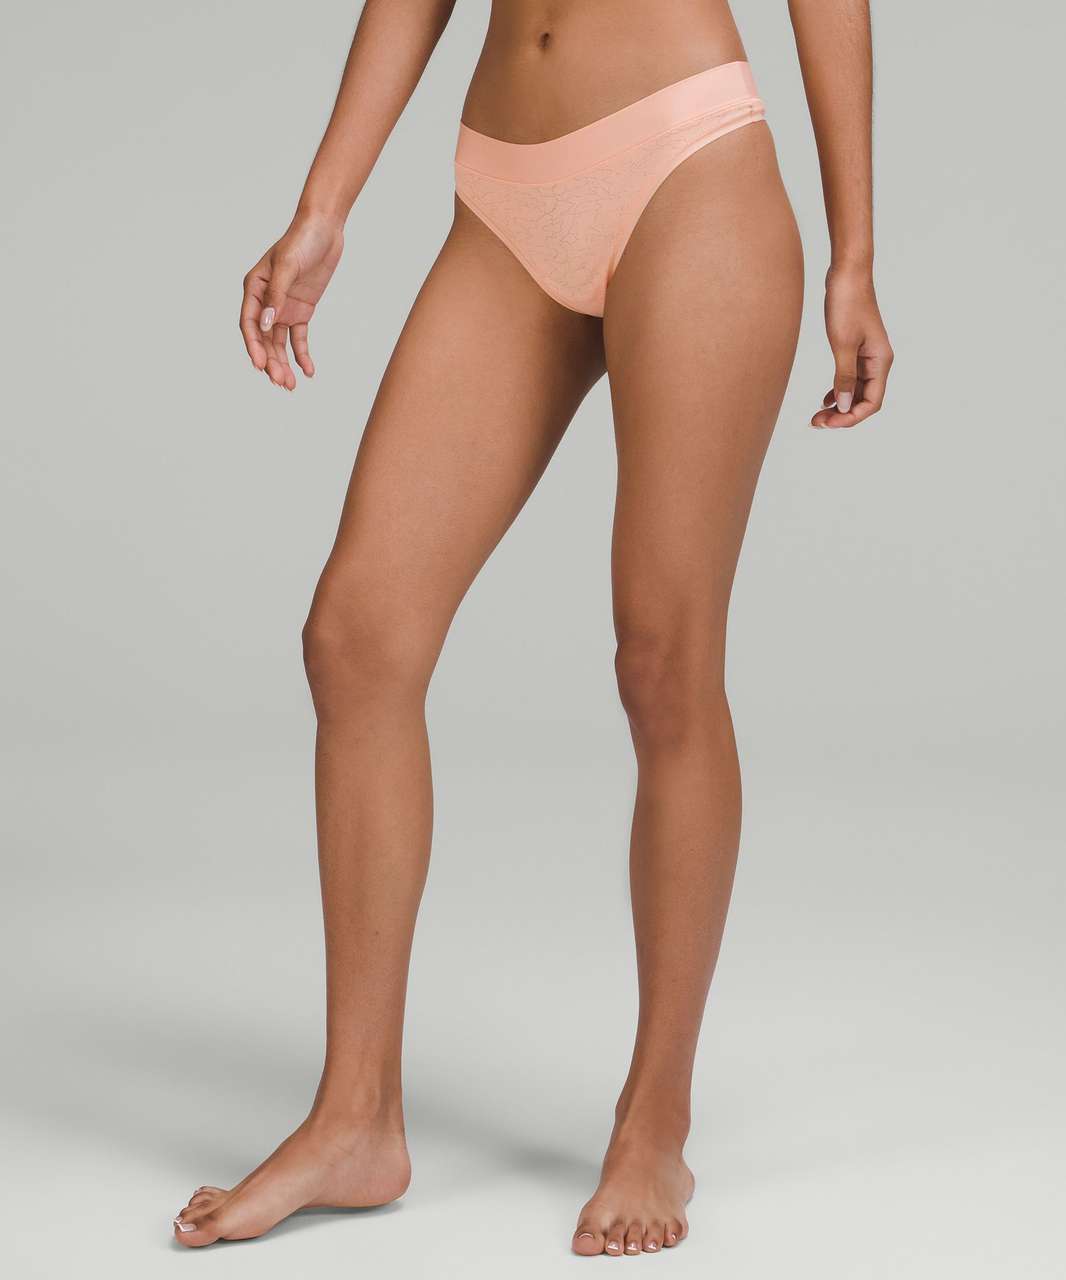 https://storage.googleapis.com/lulu-fanatics/product/74904/1280/lululemon-underease-lace-mid-rise-thong-underwear-malibu-peach-lace-056307-399653.jpg